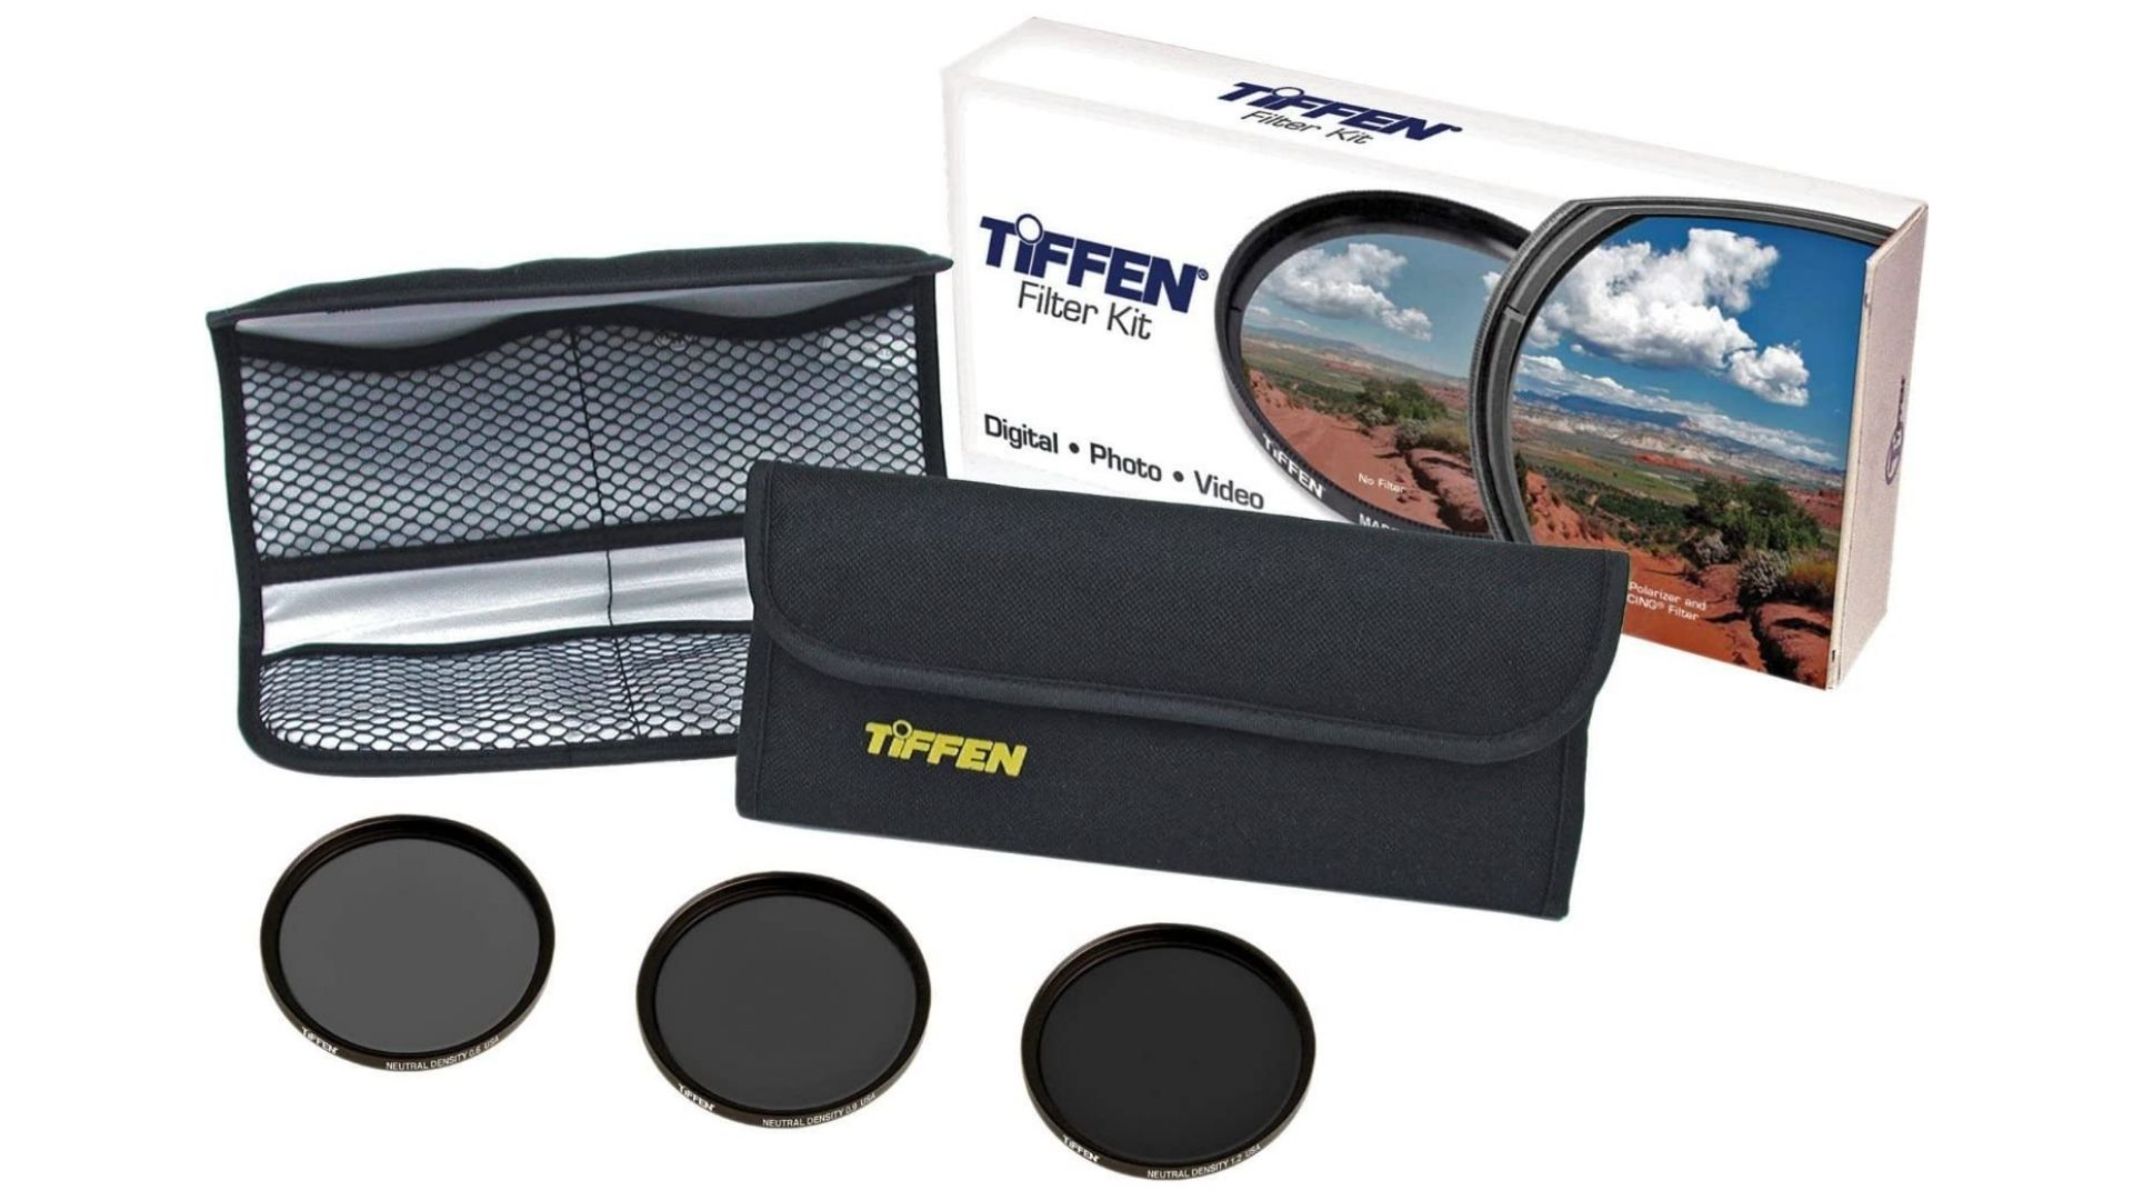 Tiffen filter kit stock image on a white background